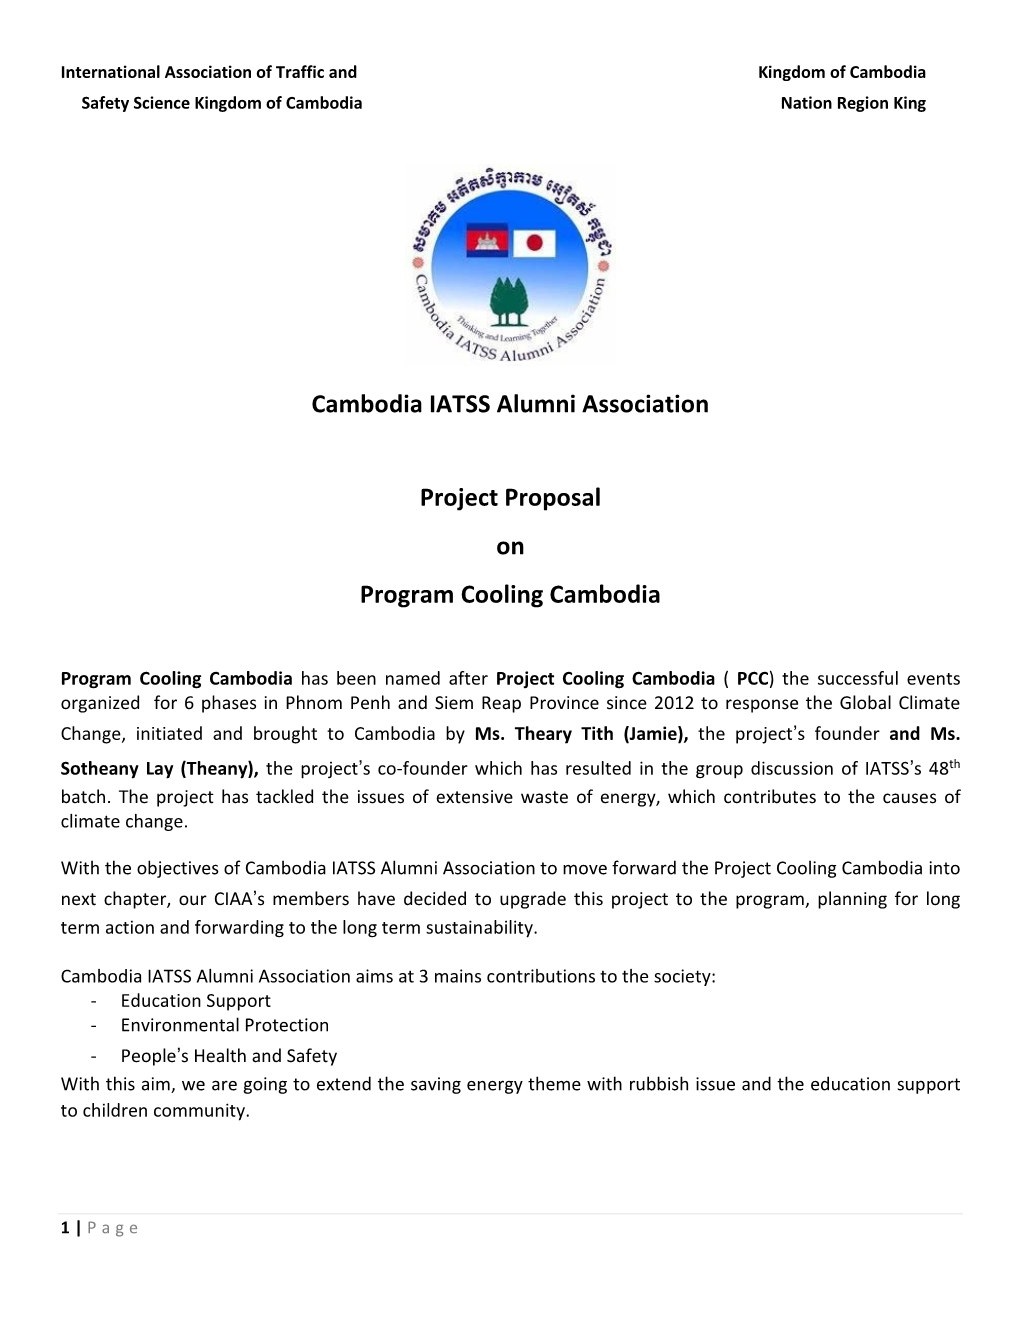 Cambodia IATSS Alumni Association Project Proposal on Program